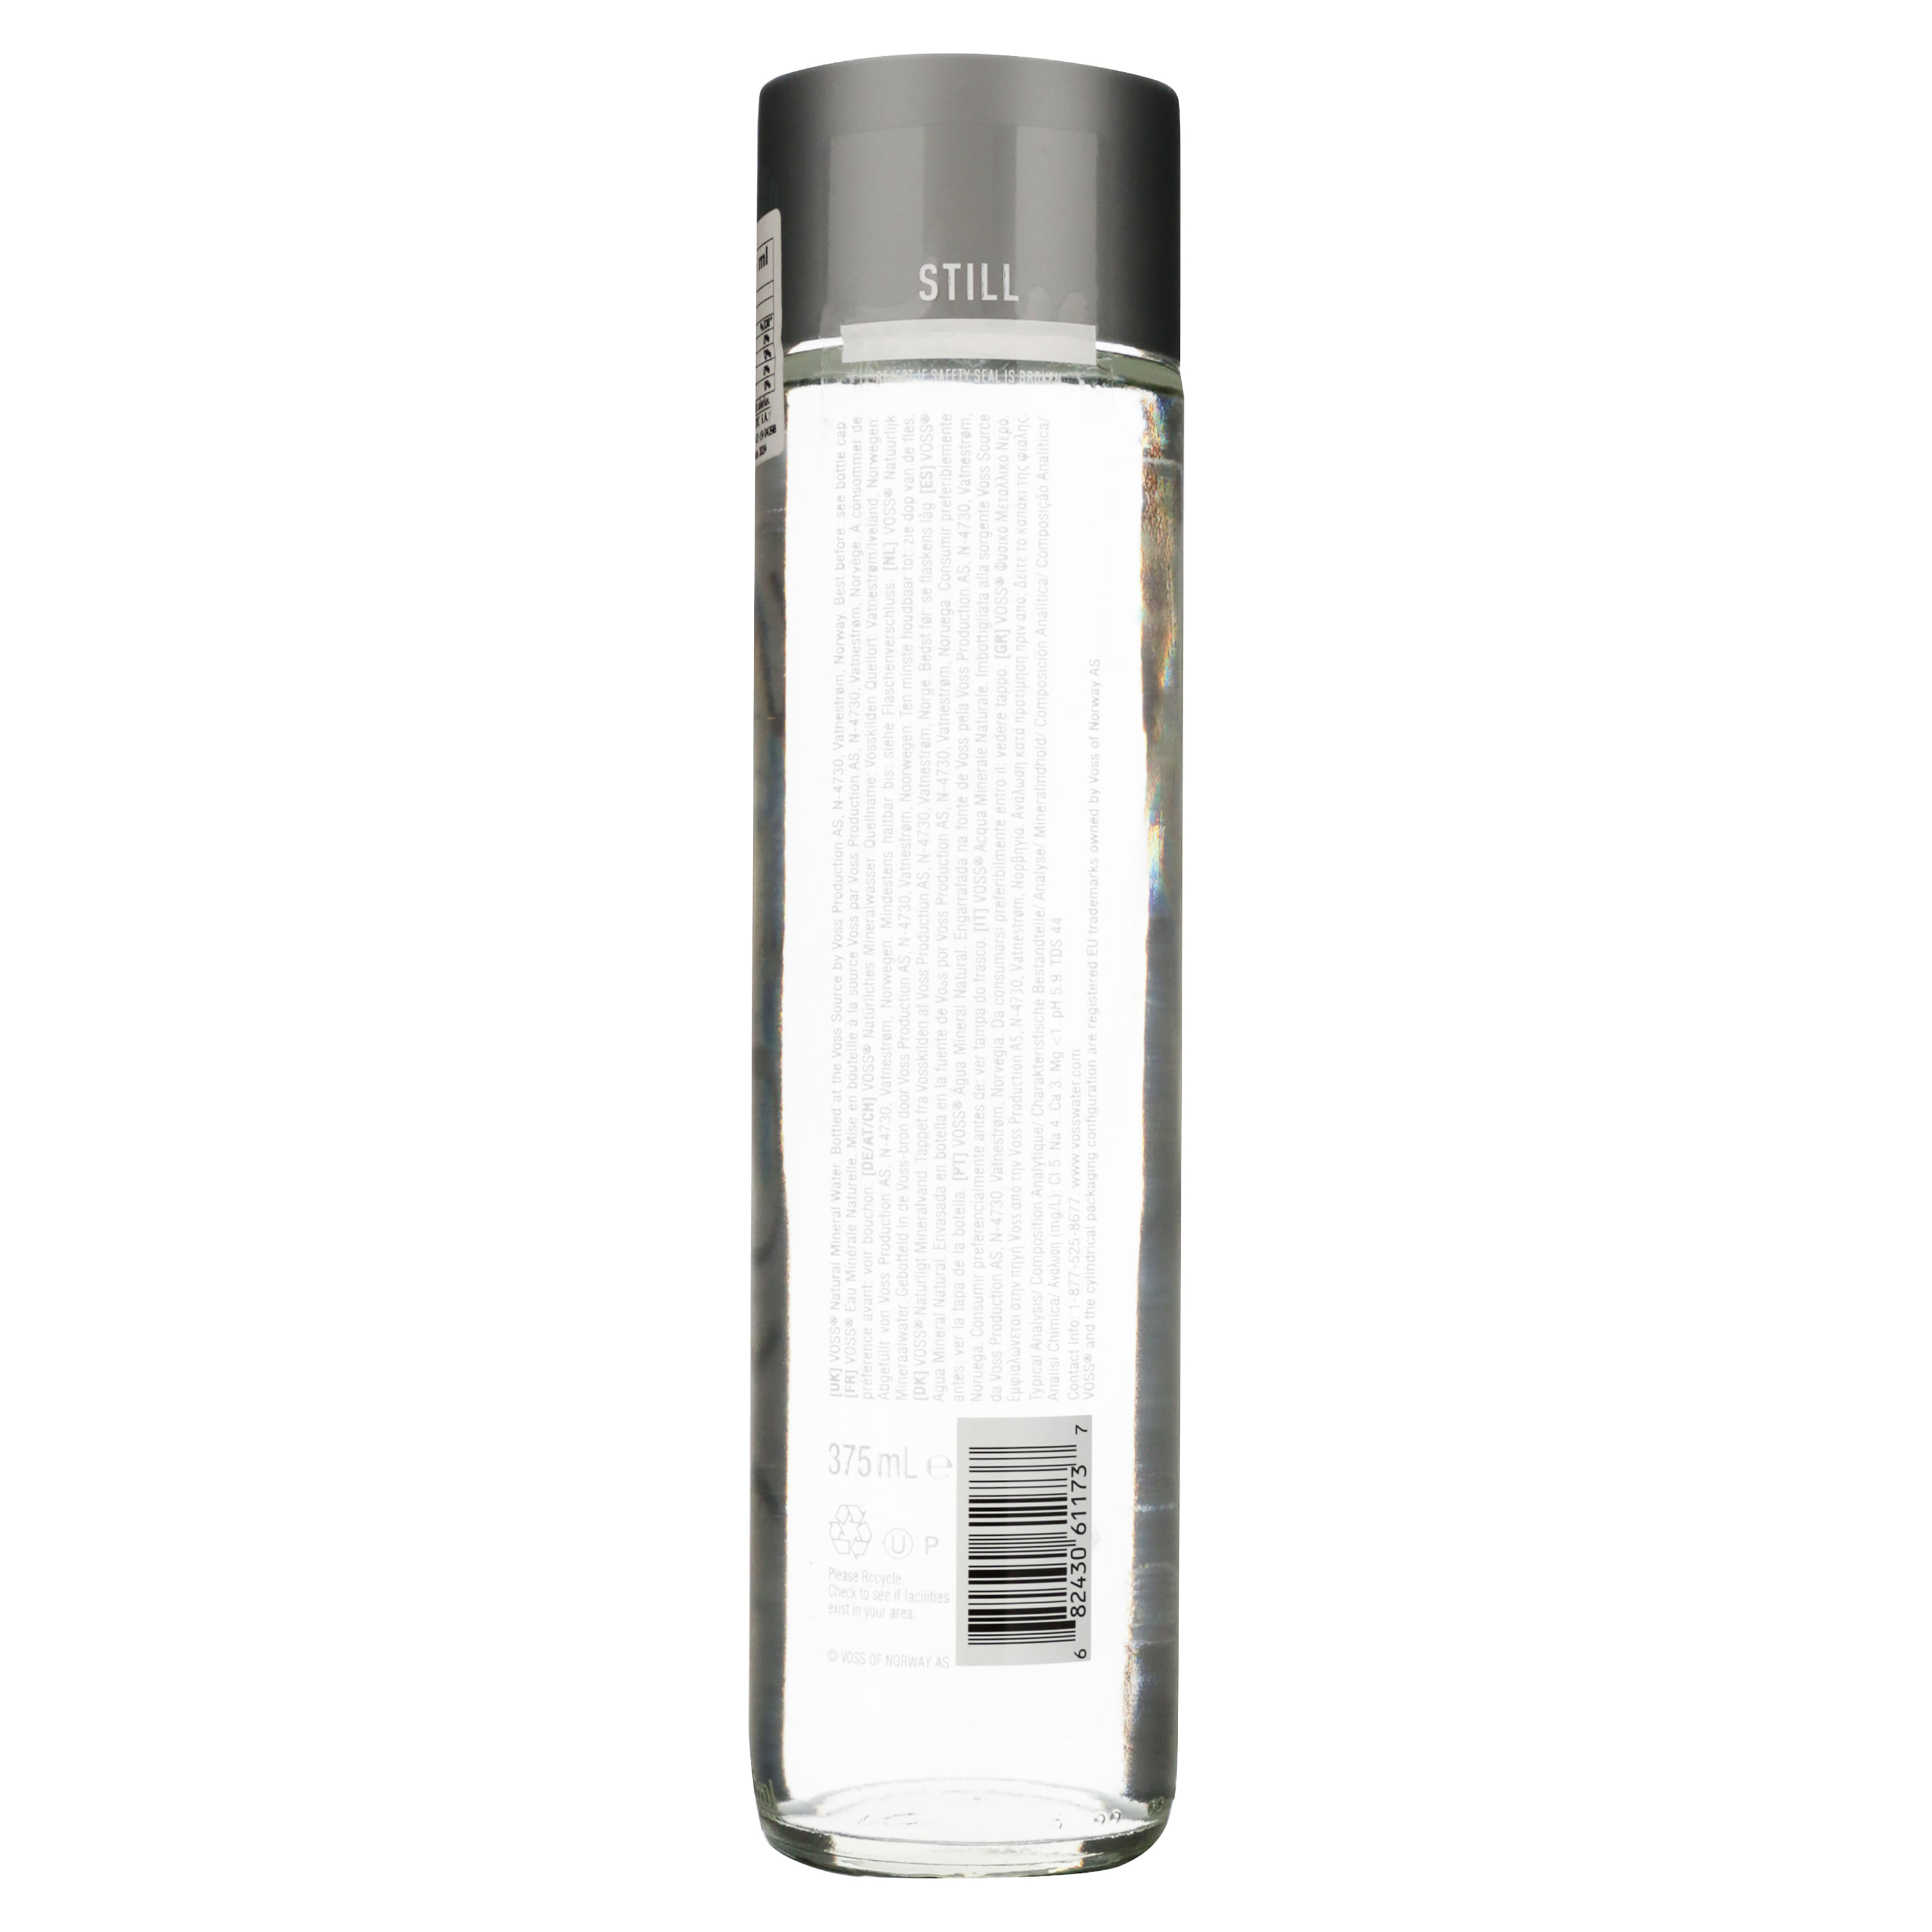 Agua mineral voss carbonatada botella vidriox375ml - Tiendas Metro